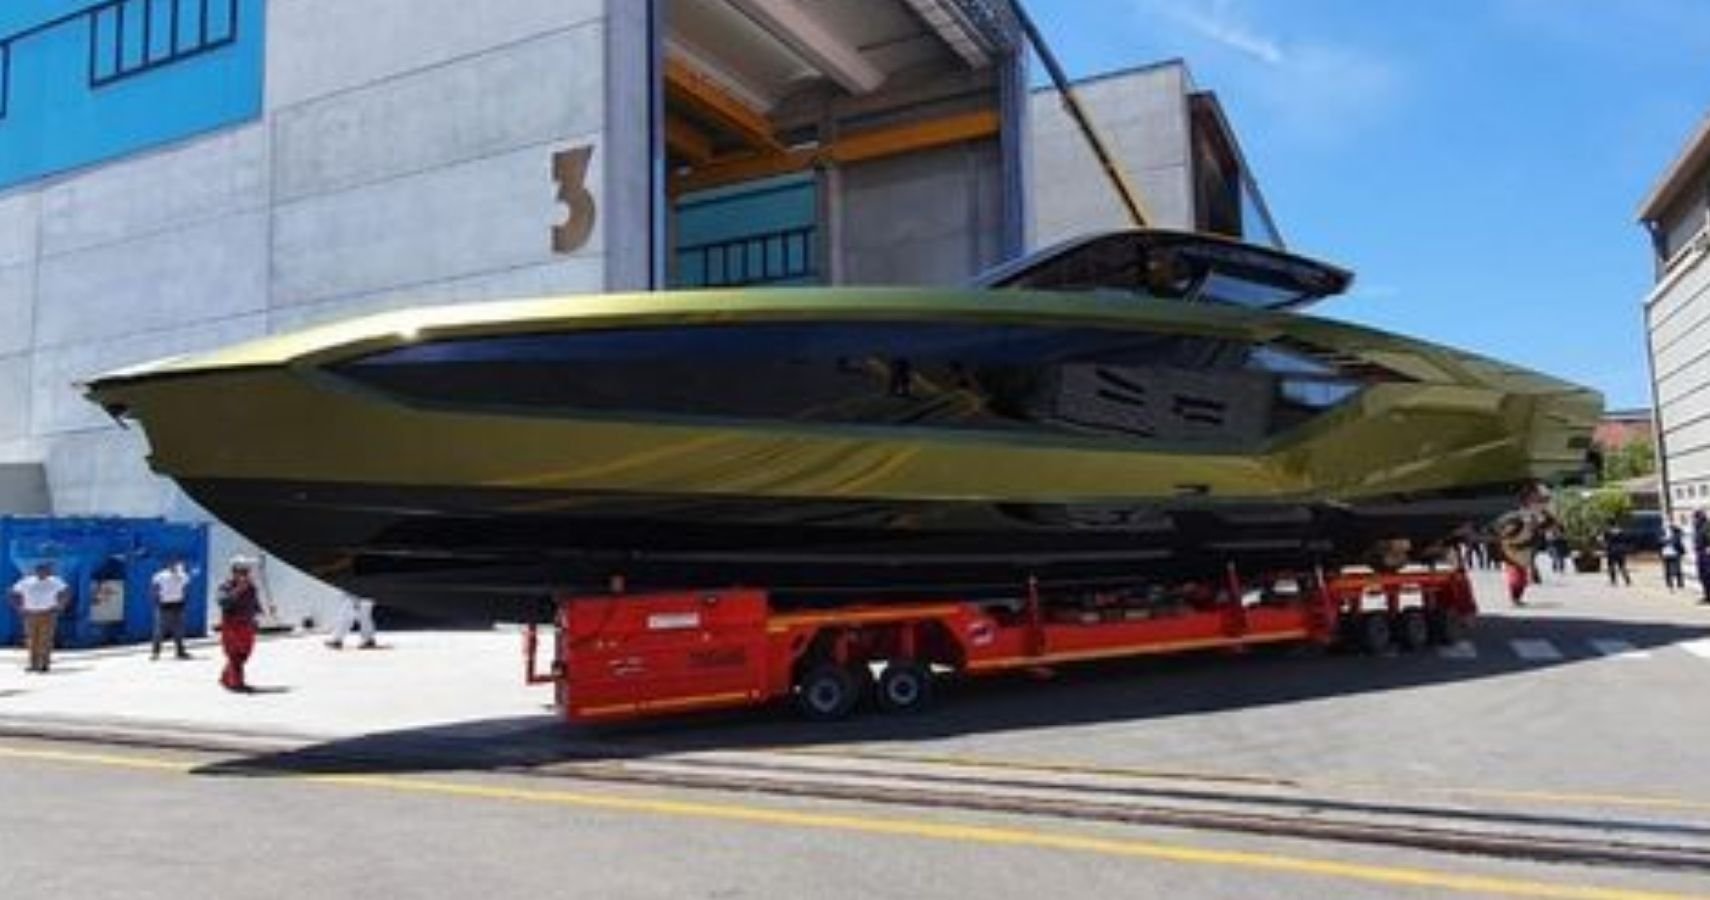 How Conor McGregor Made His $4 Million Lamborghini Yacht Even More Exclusive